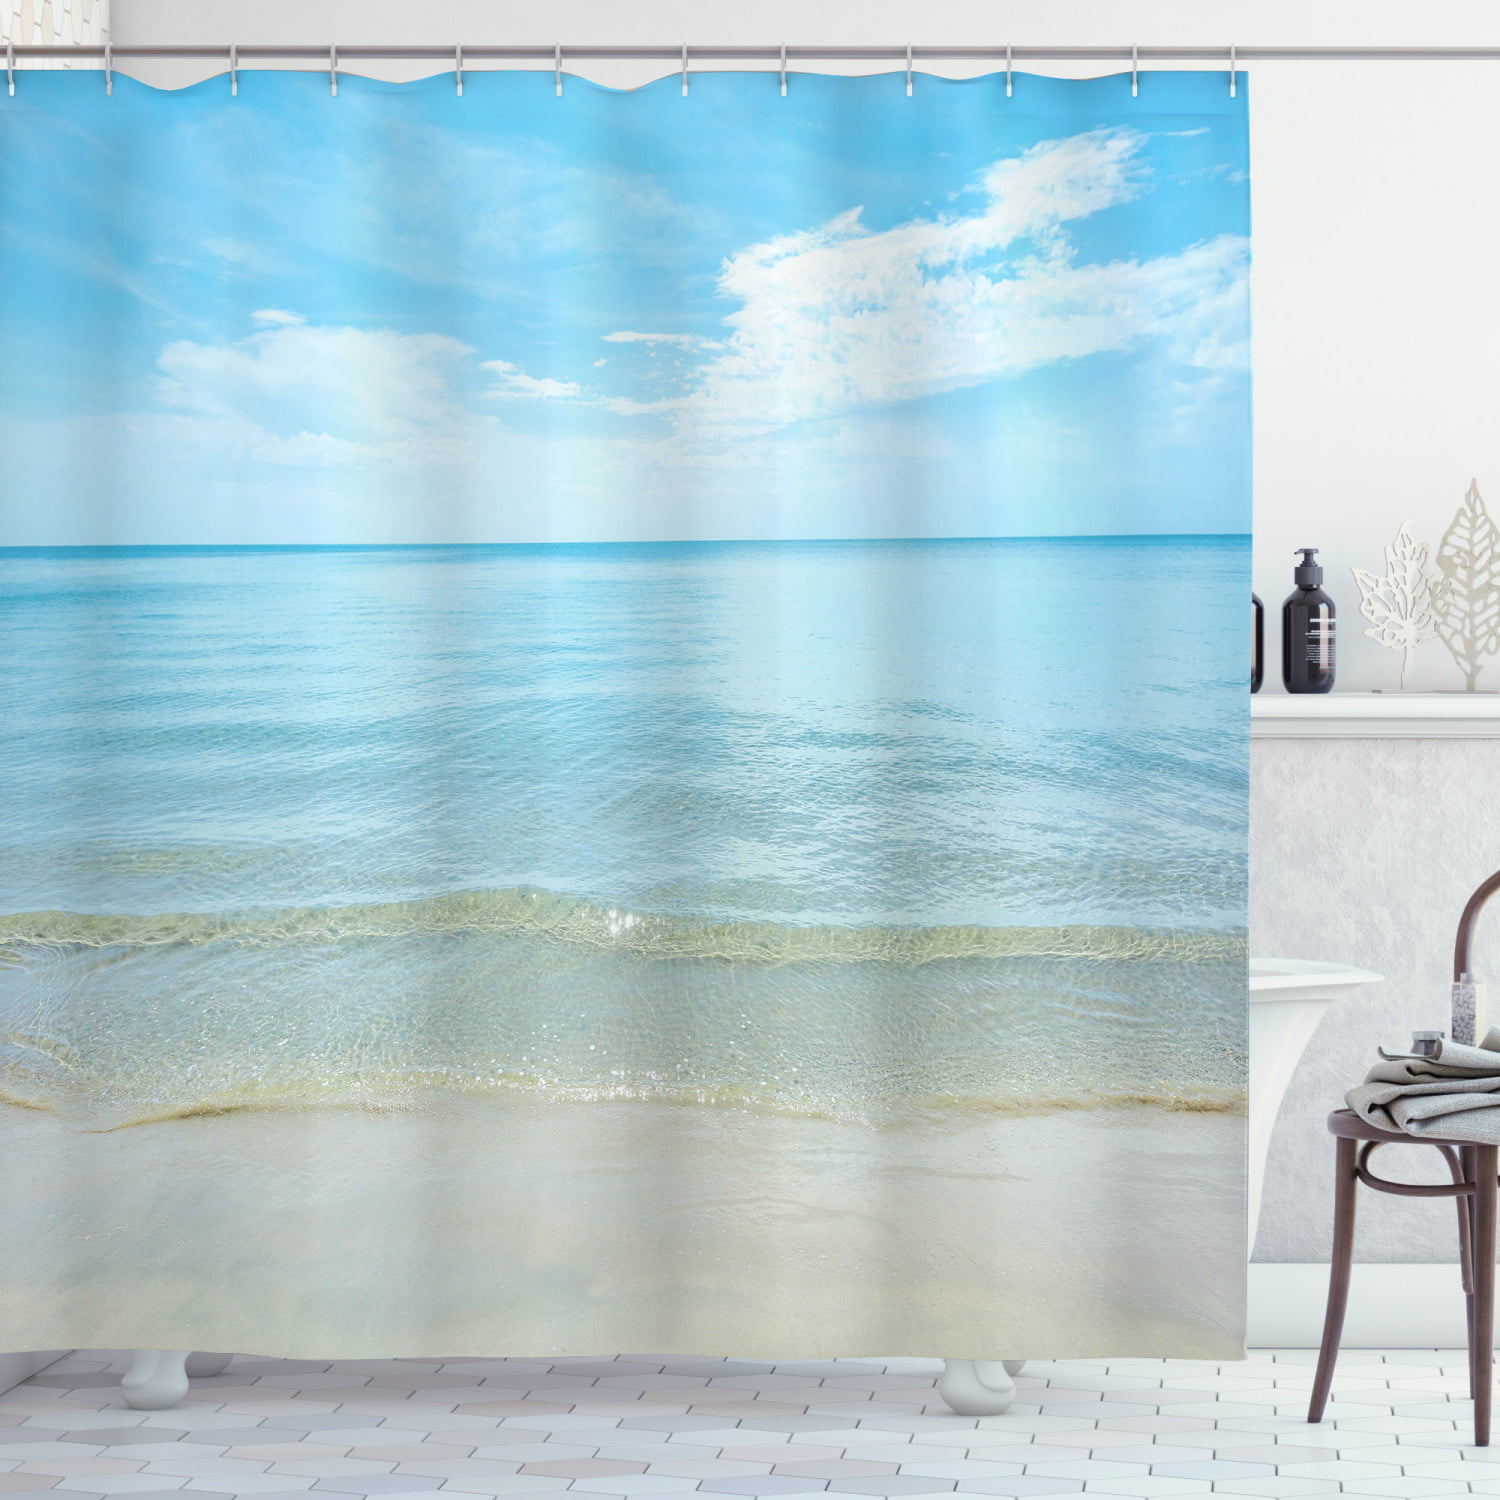 Summer Sandy Beach Scenery Bathroom Waterproof Fabric Shower Curtain 12 Hooks 